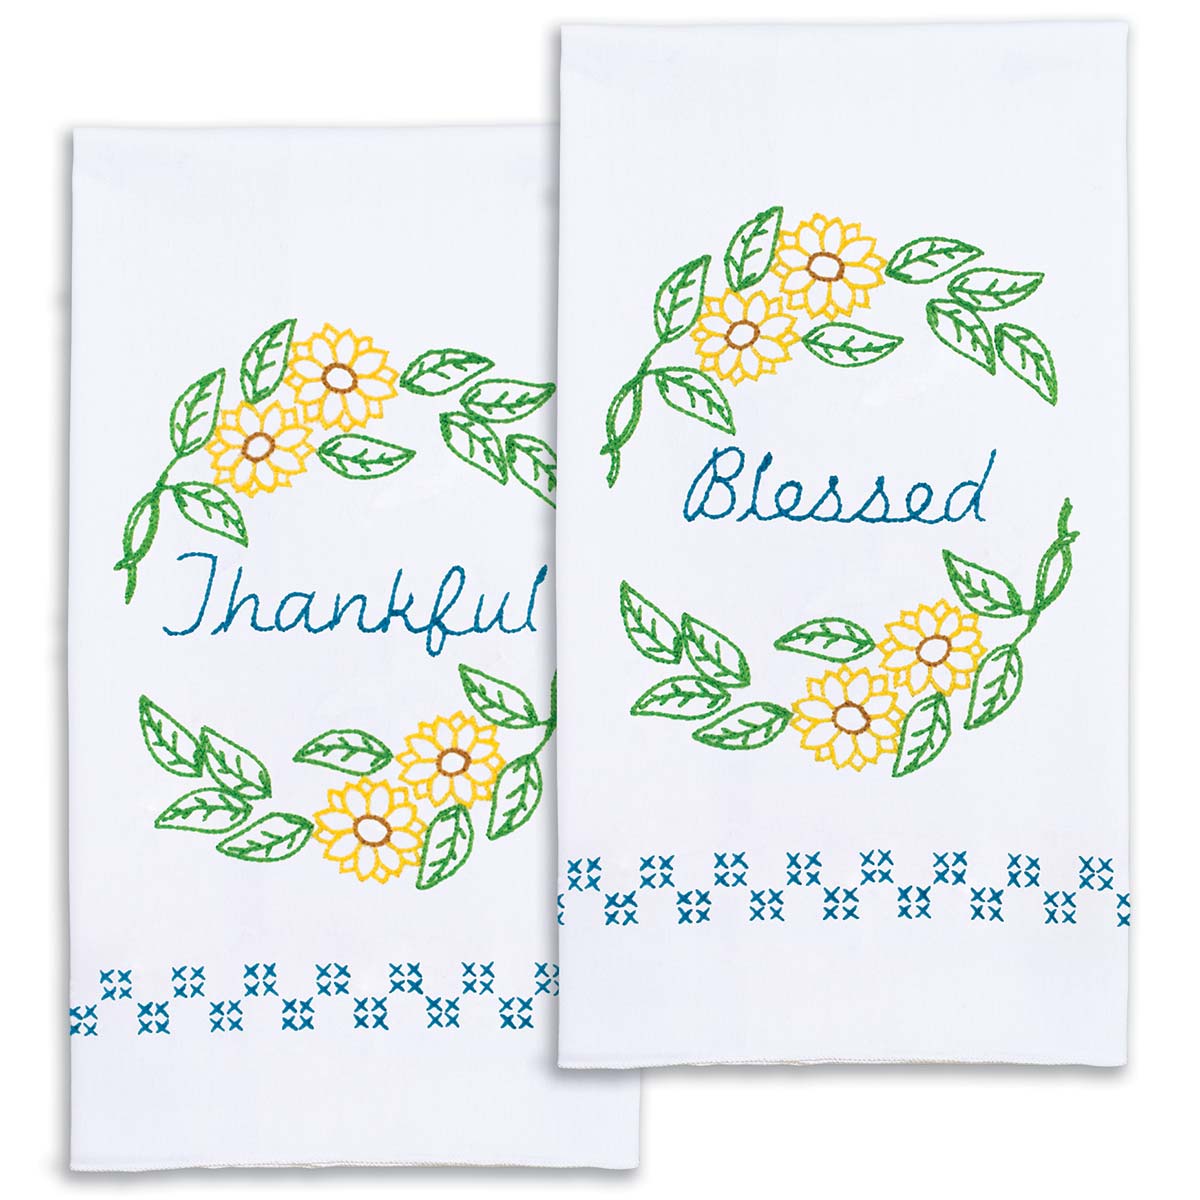 https://www.jdneedleart.com/wp-content/uploads/jdna-320-779-Thankful-blessed-hand-towels.jpg